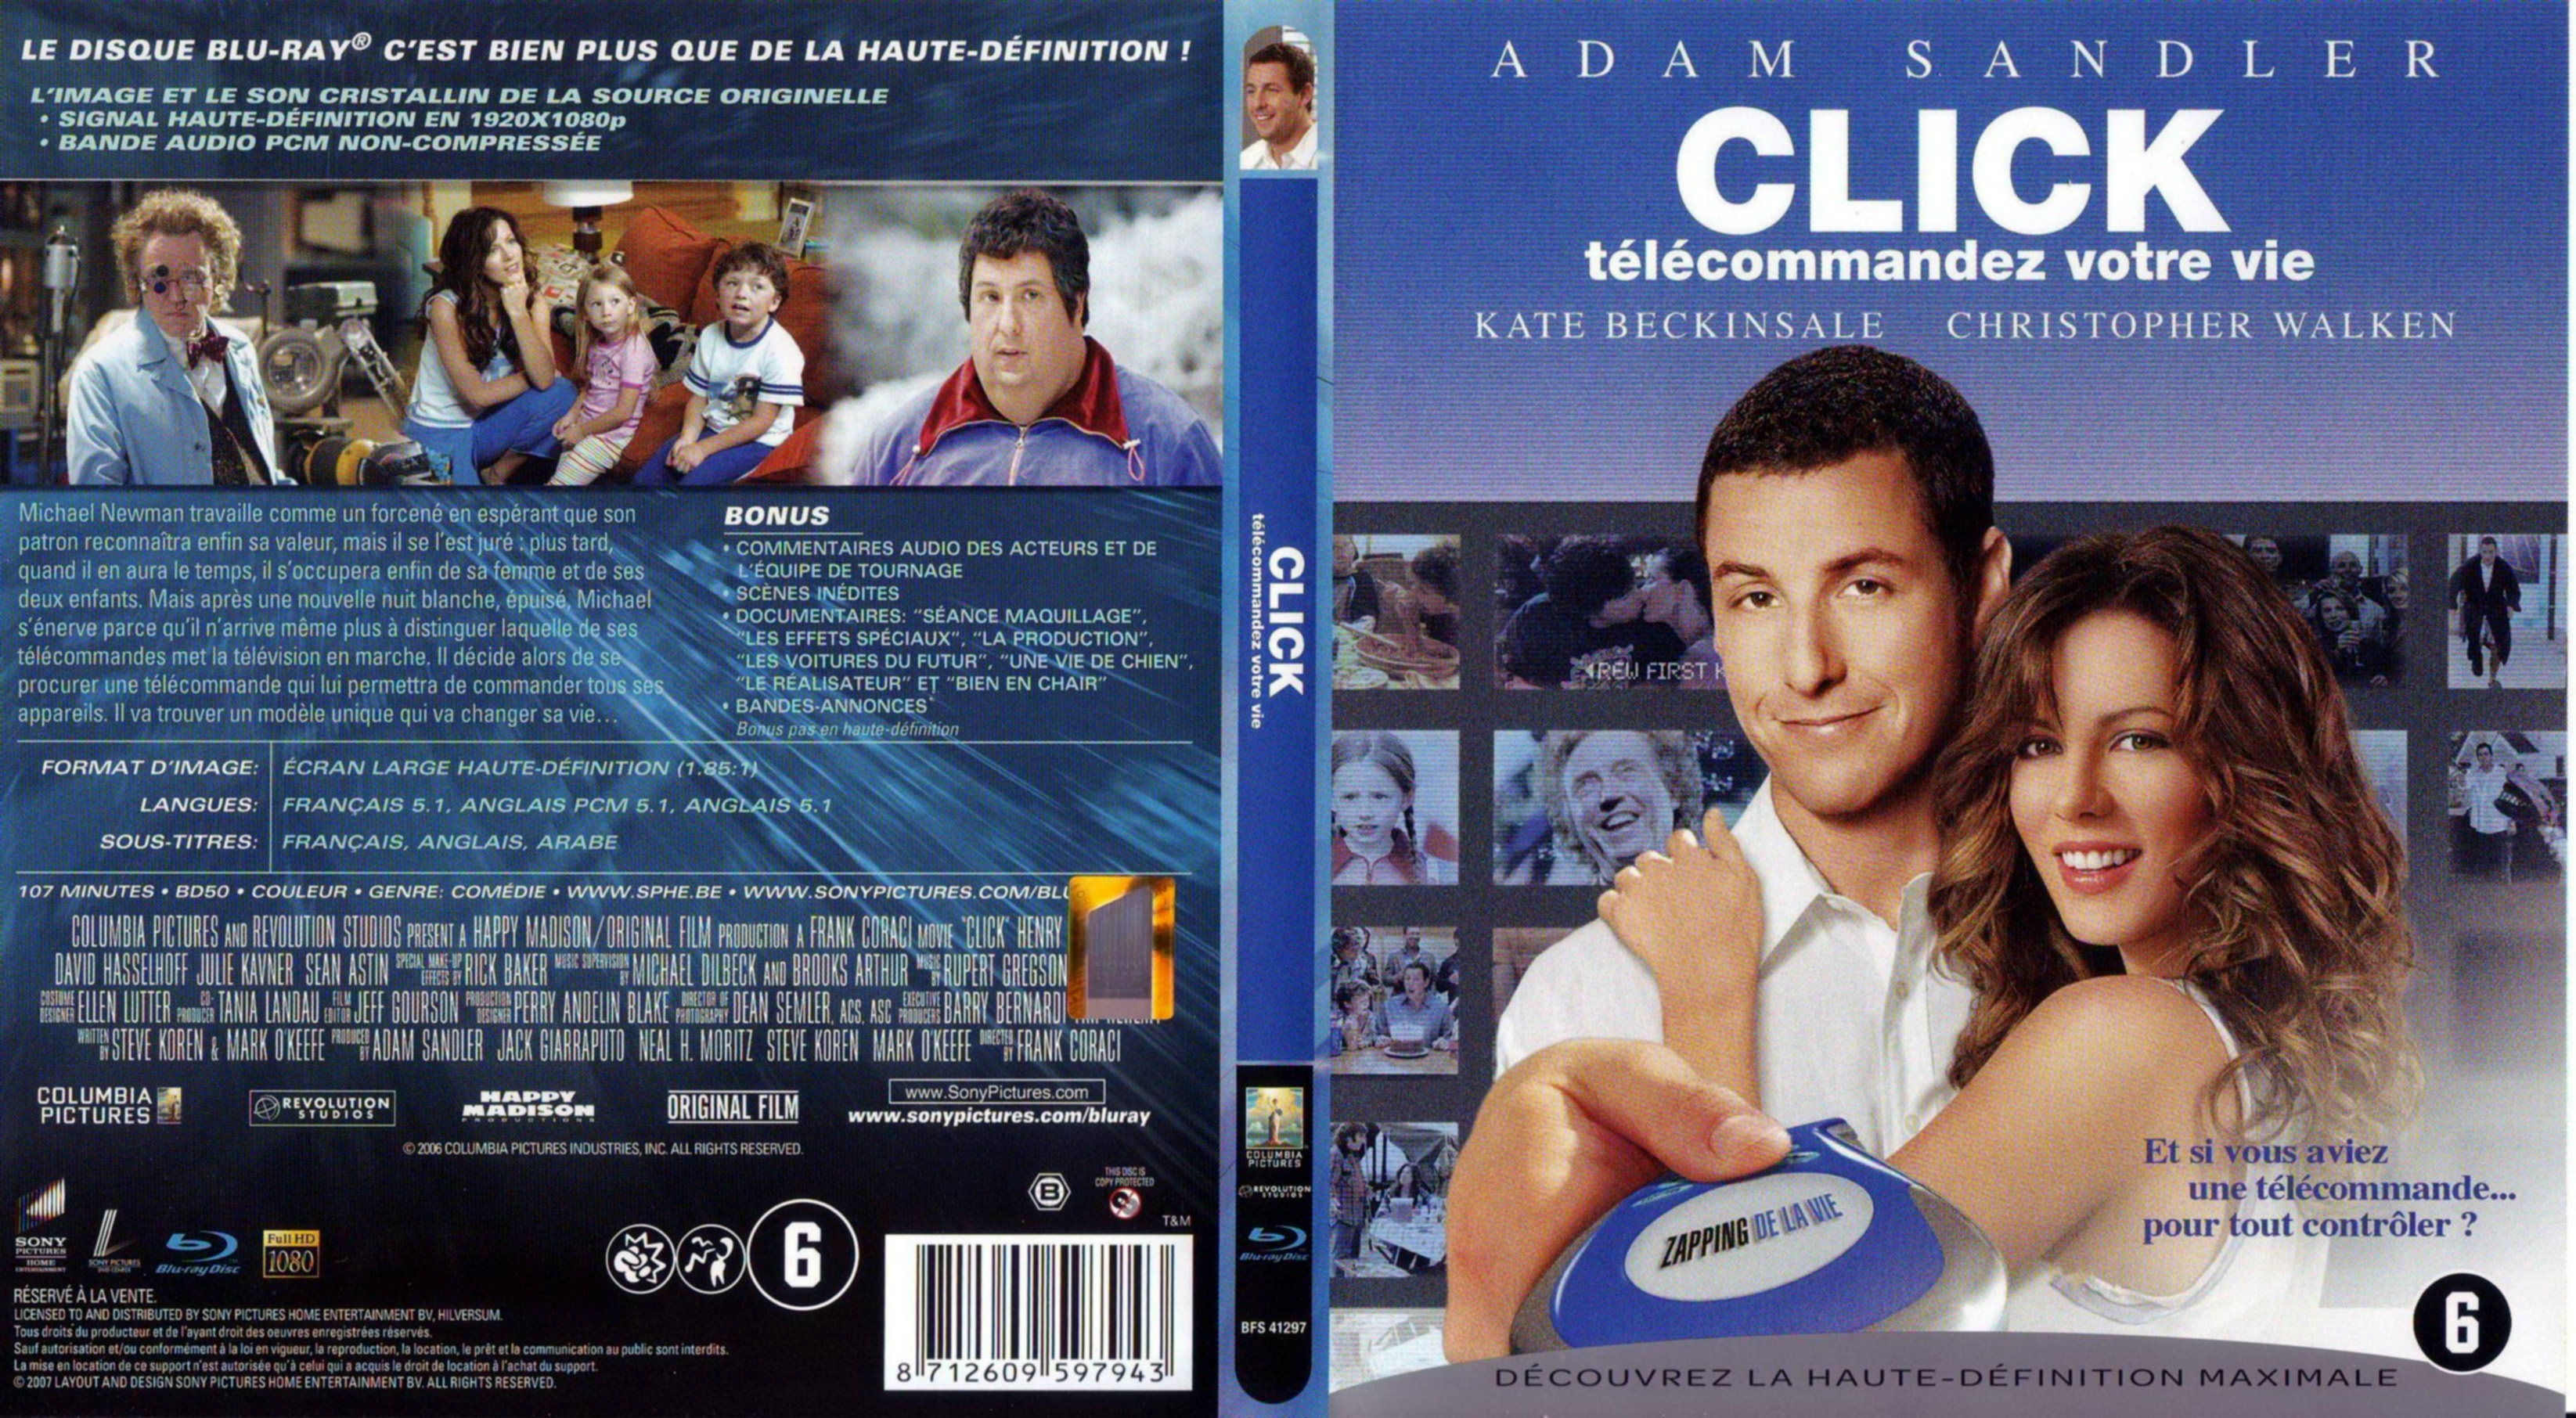 Jaquette DVD Click telecommandez votre vie (BLU-RAY)